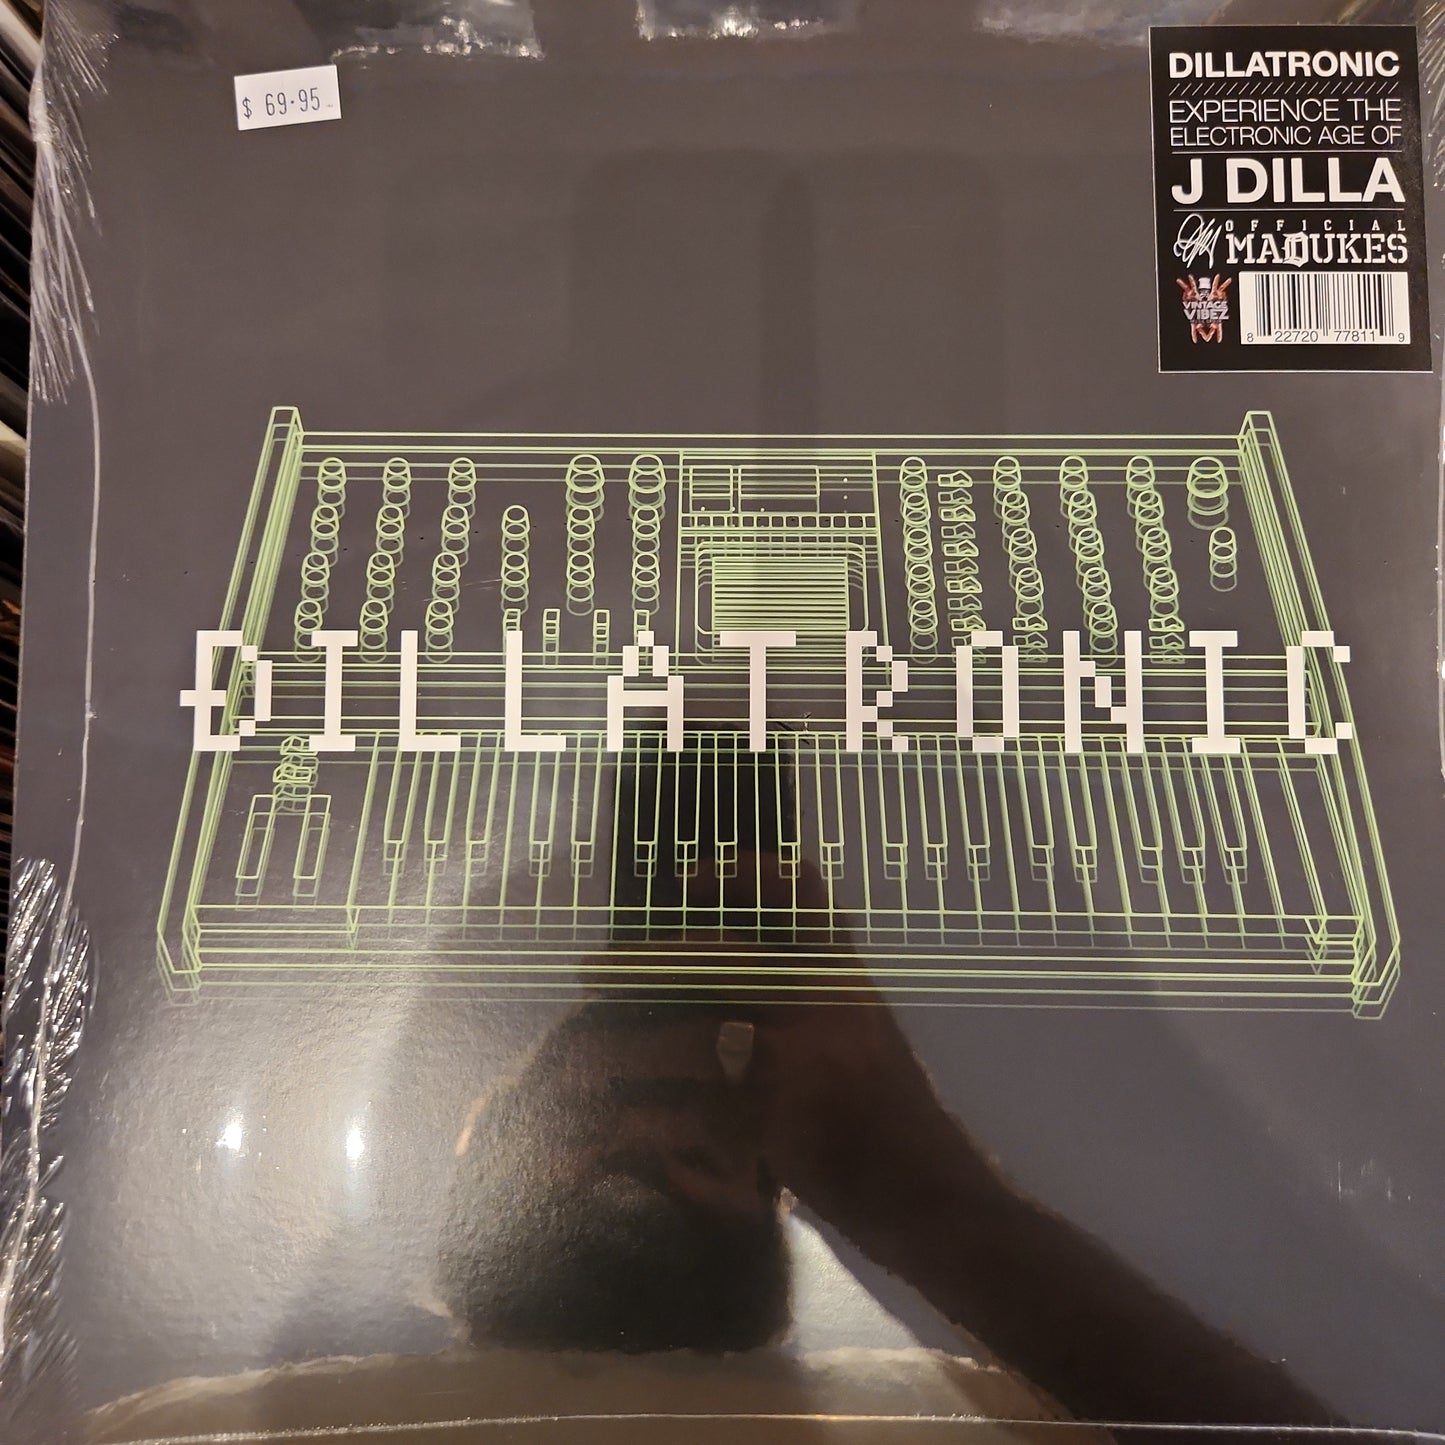 J Dilla - Dillatronic - Vinyl LP